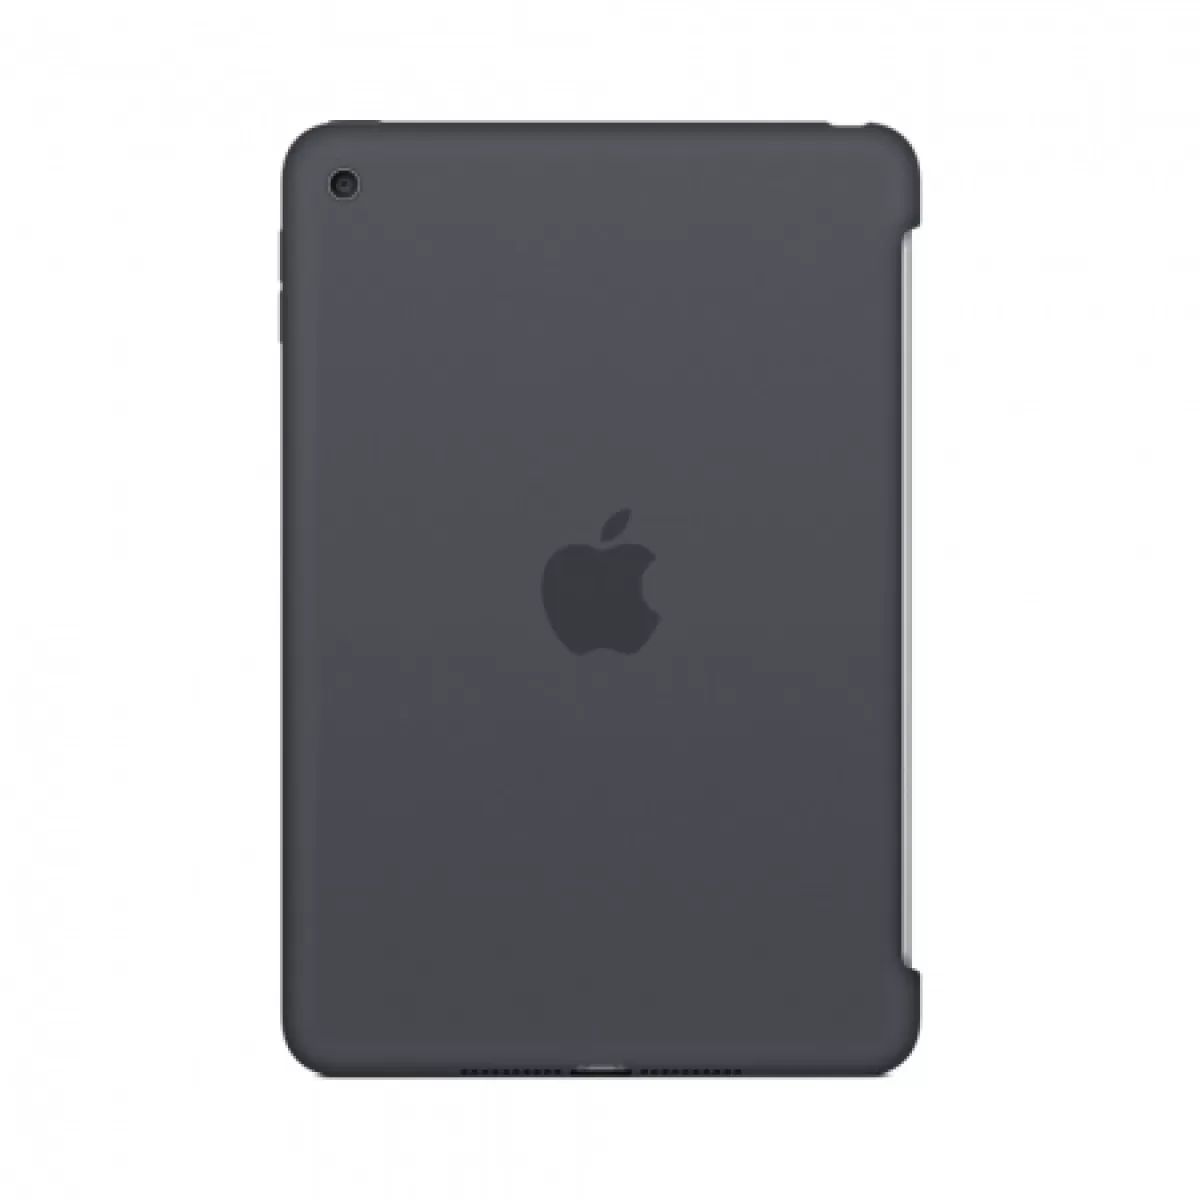 Apple iPad mini 4 Silicone Case Charcoal Gray